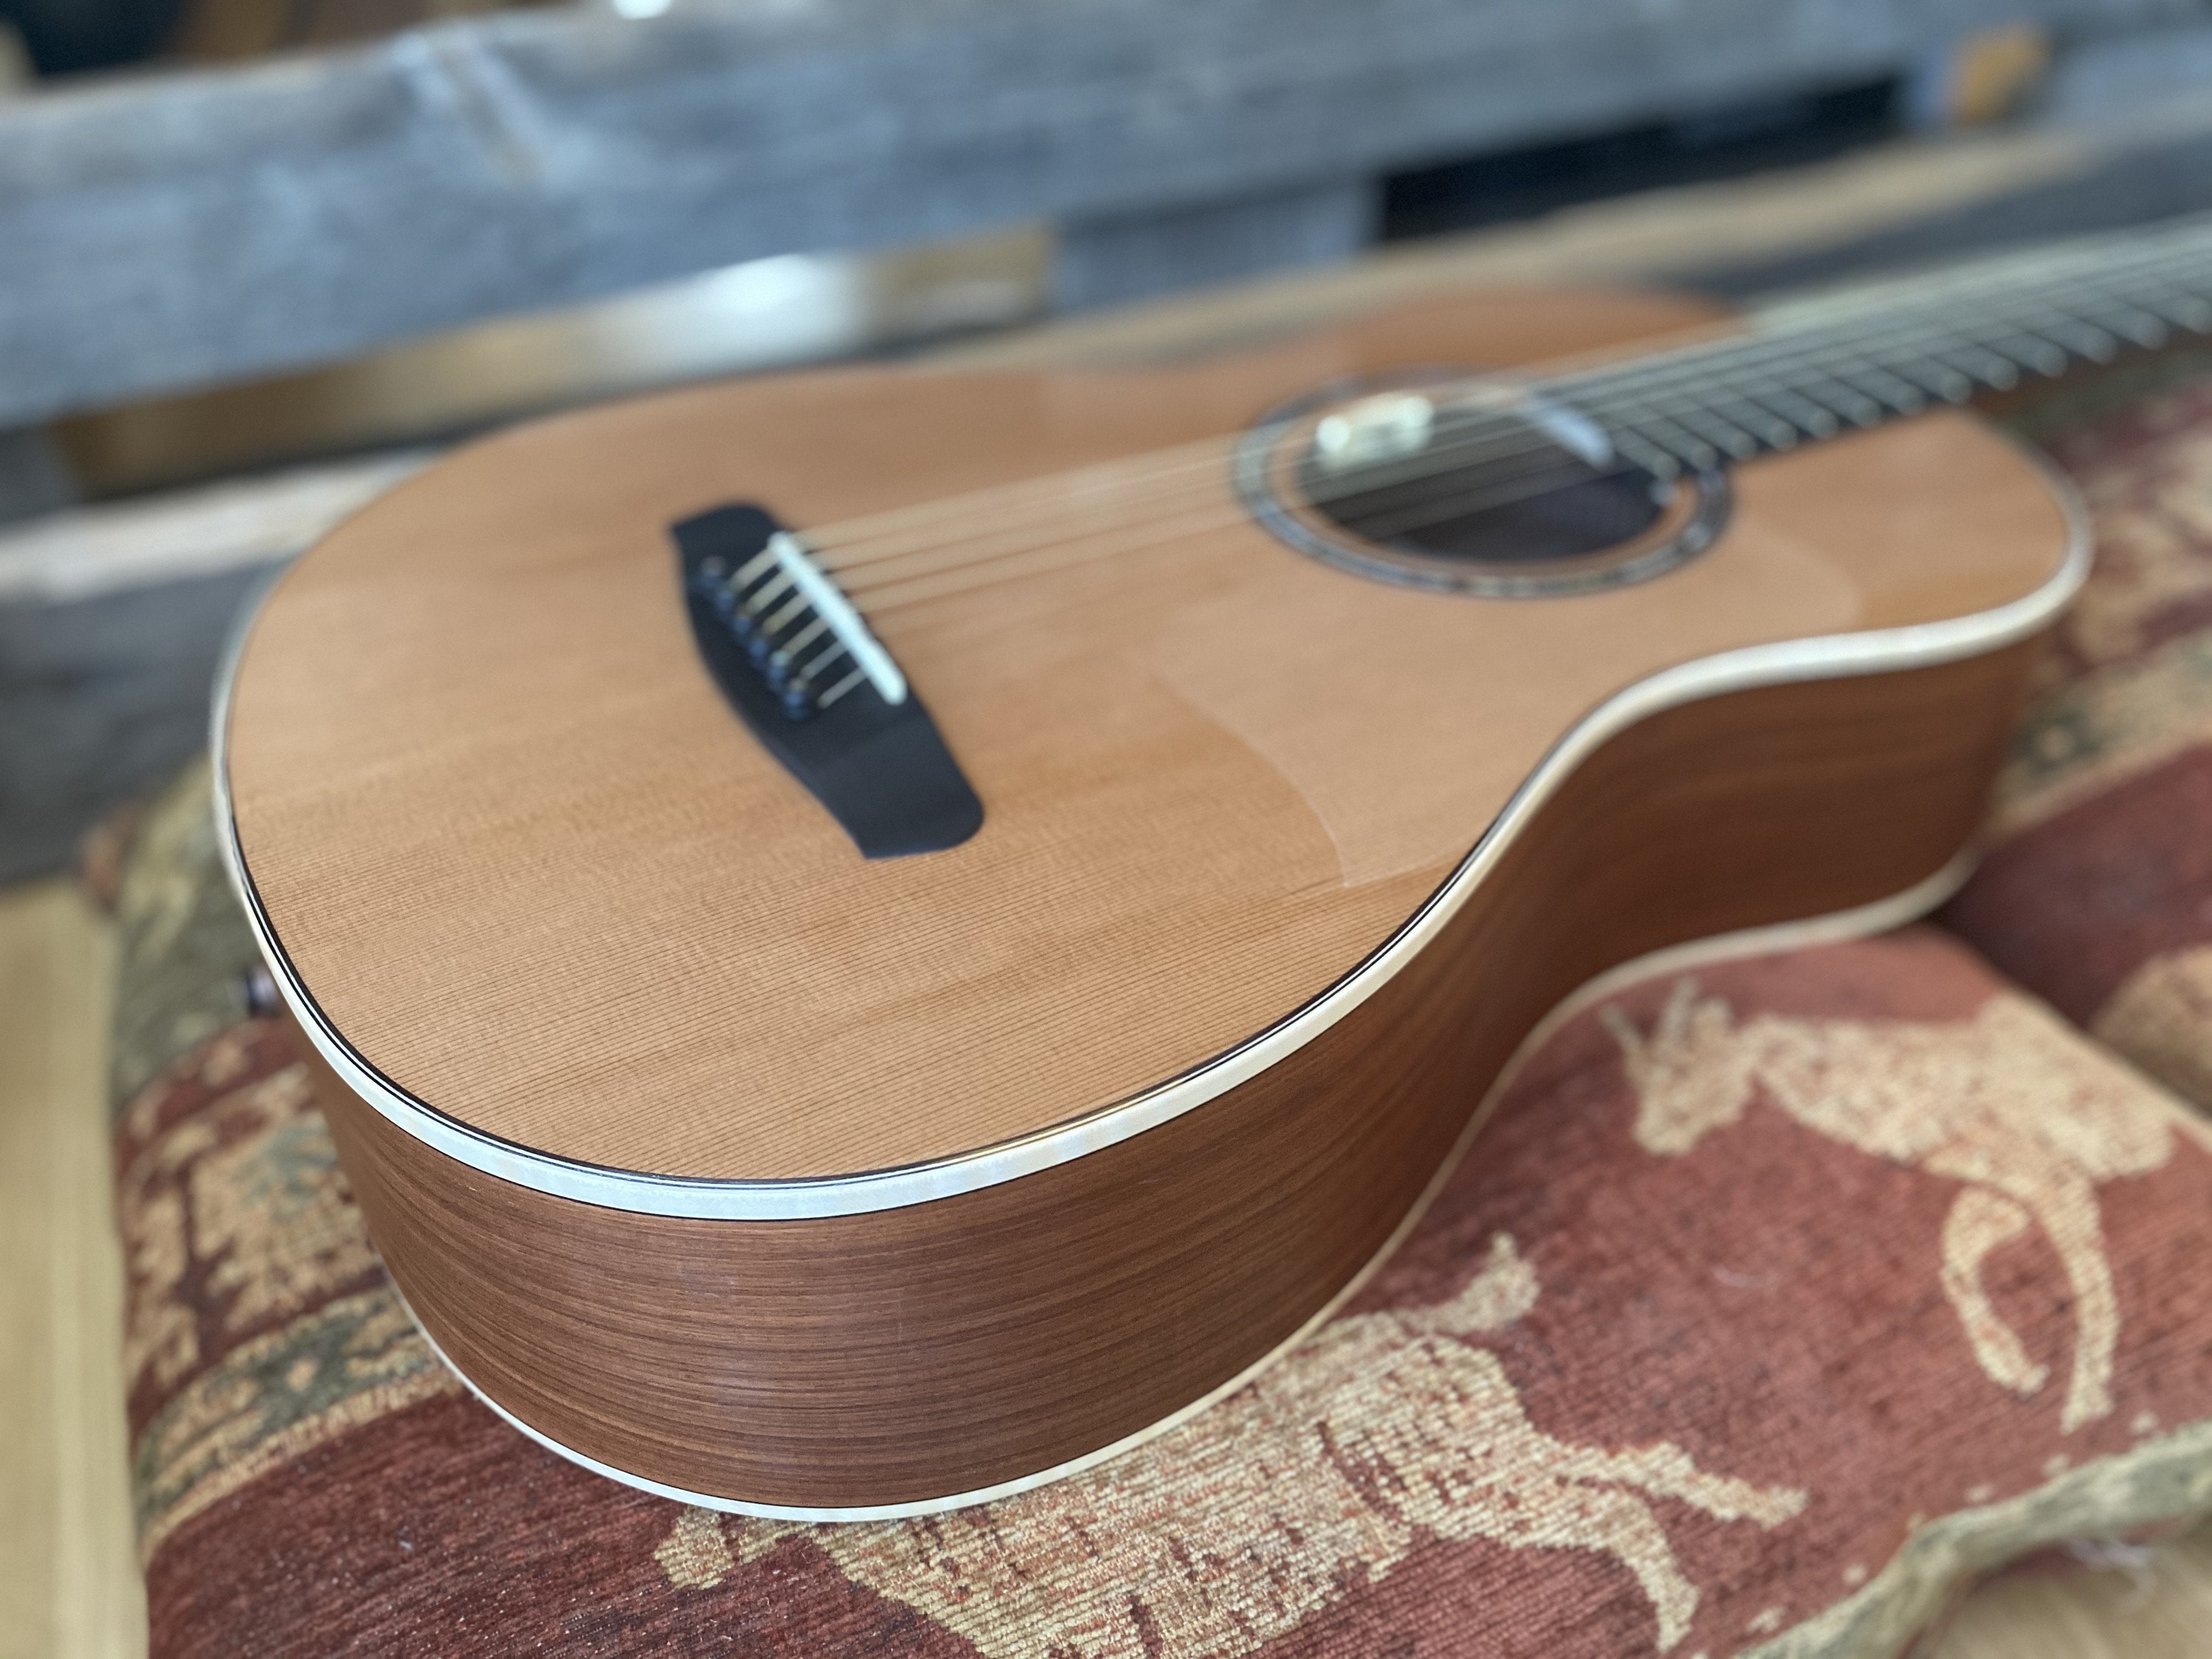 Dowina Granadillo BV, Electro Acoustic Guitar for sale at Richards Guitars.